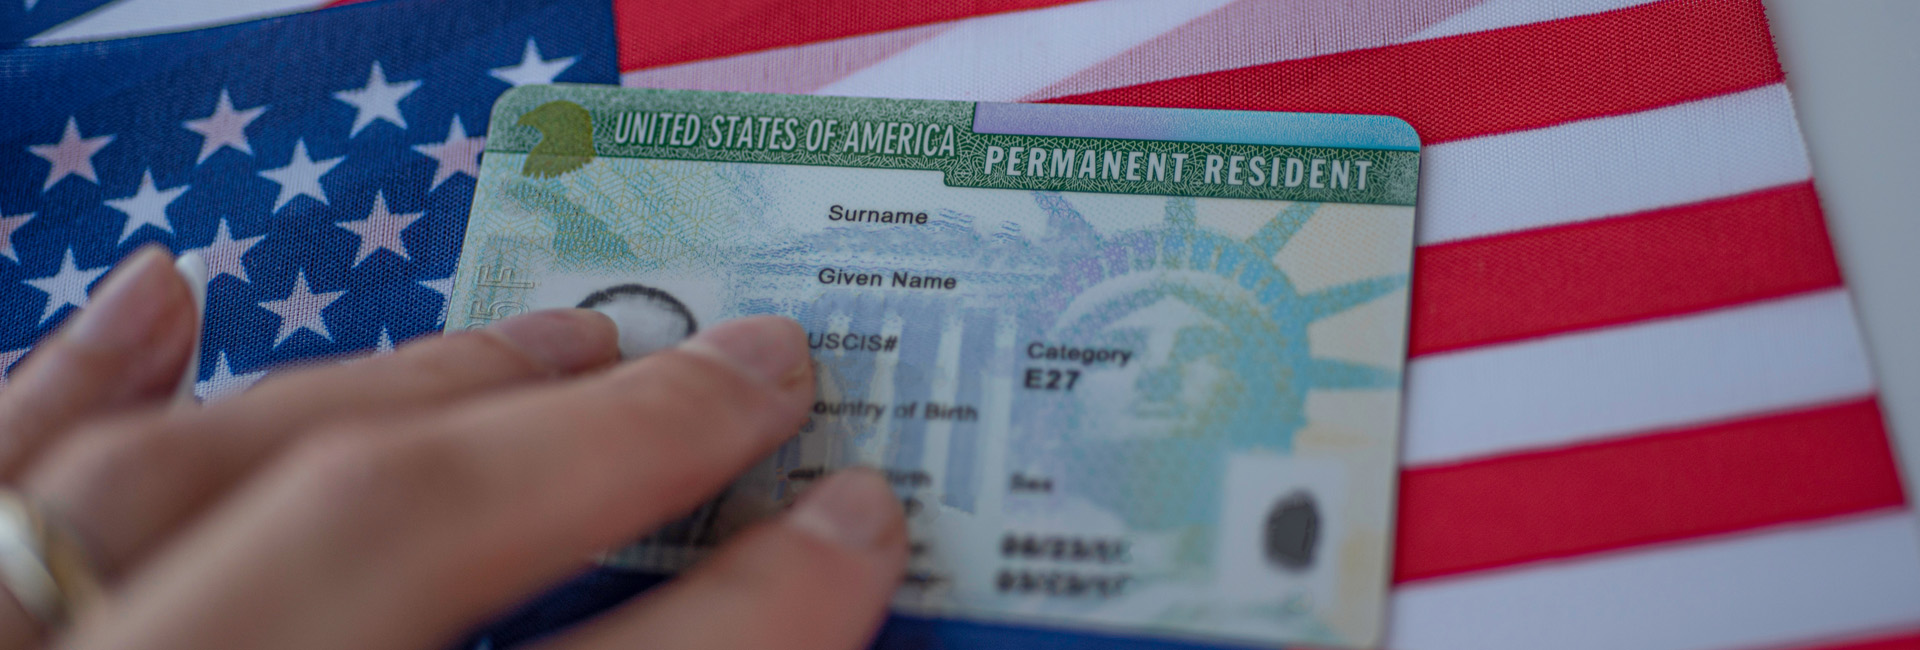 US-Green-Card-2.jpg